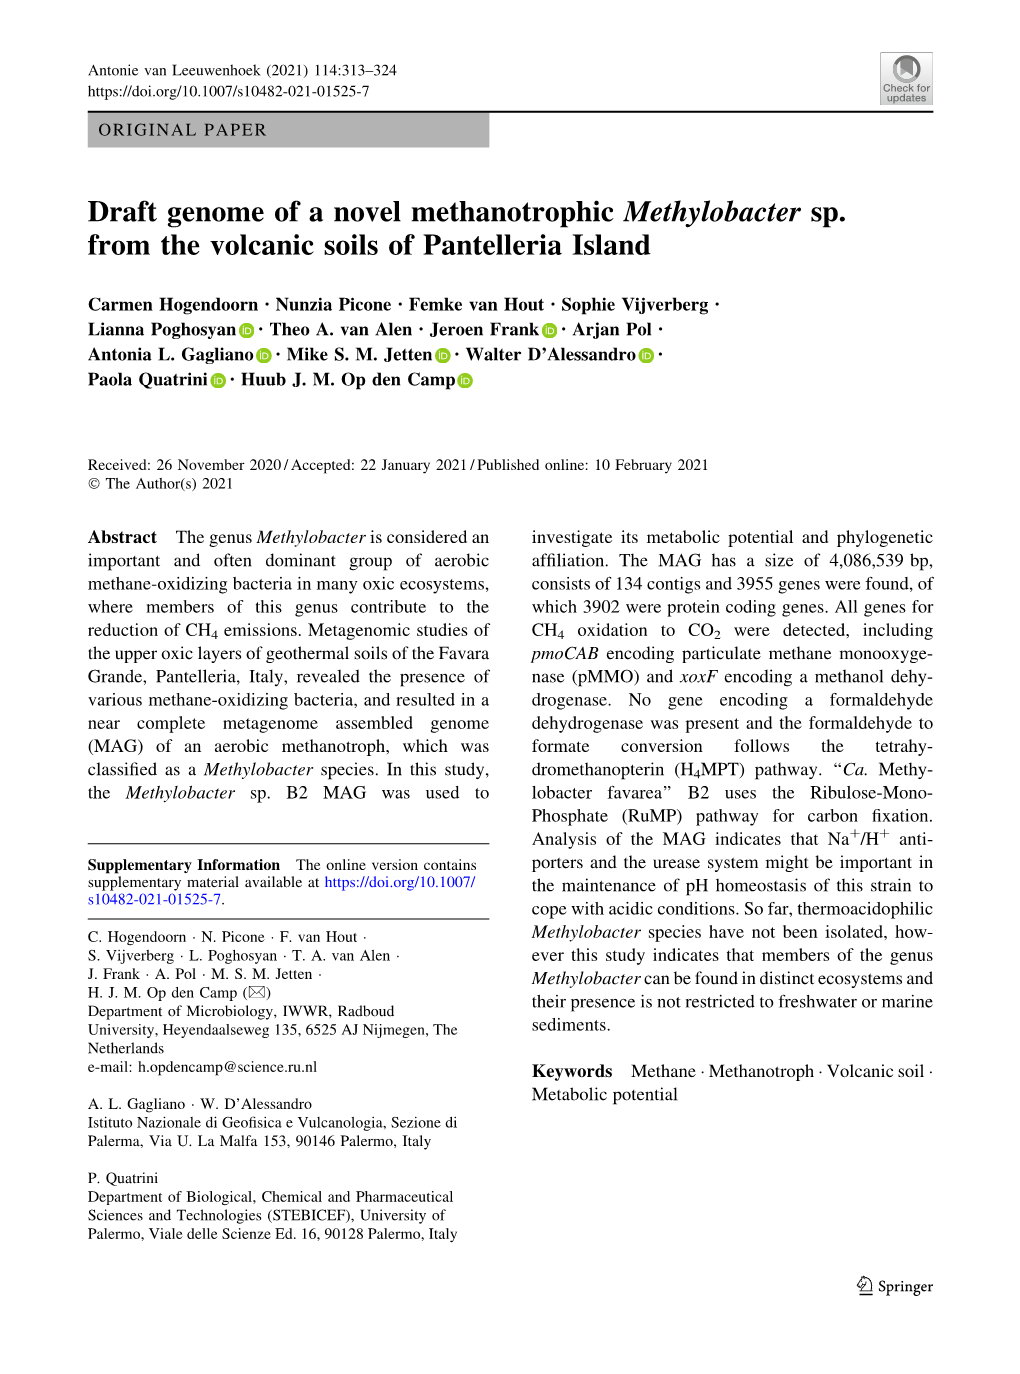 Draft Genome of a Novel Methanotrophic Methylobacter Sp